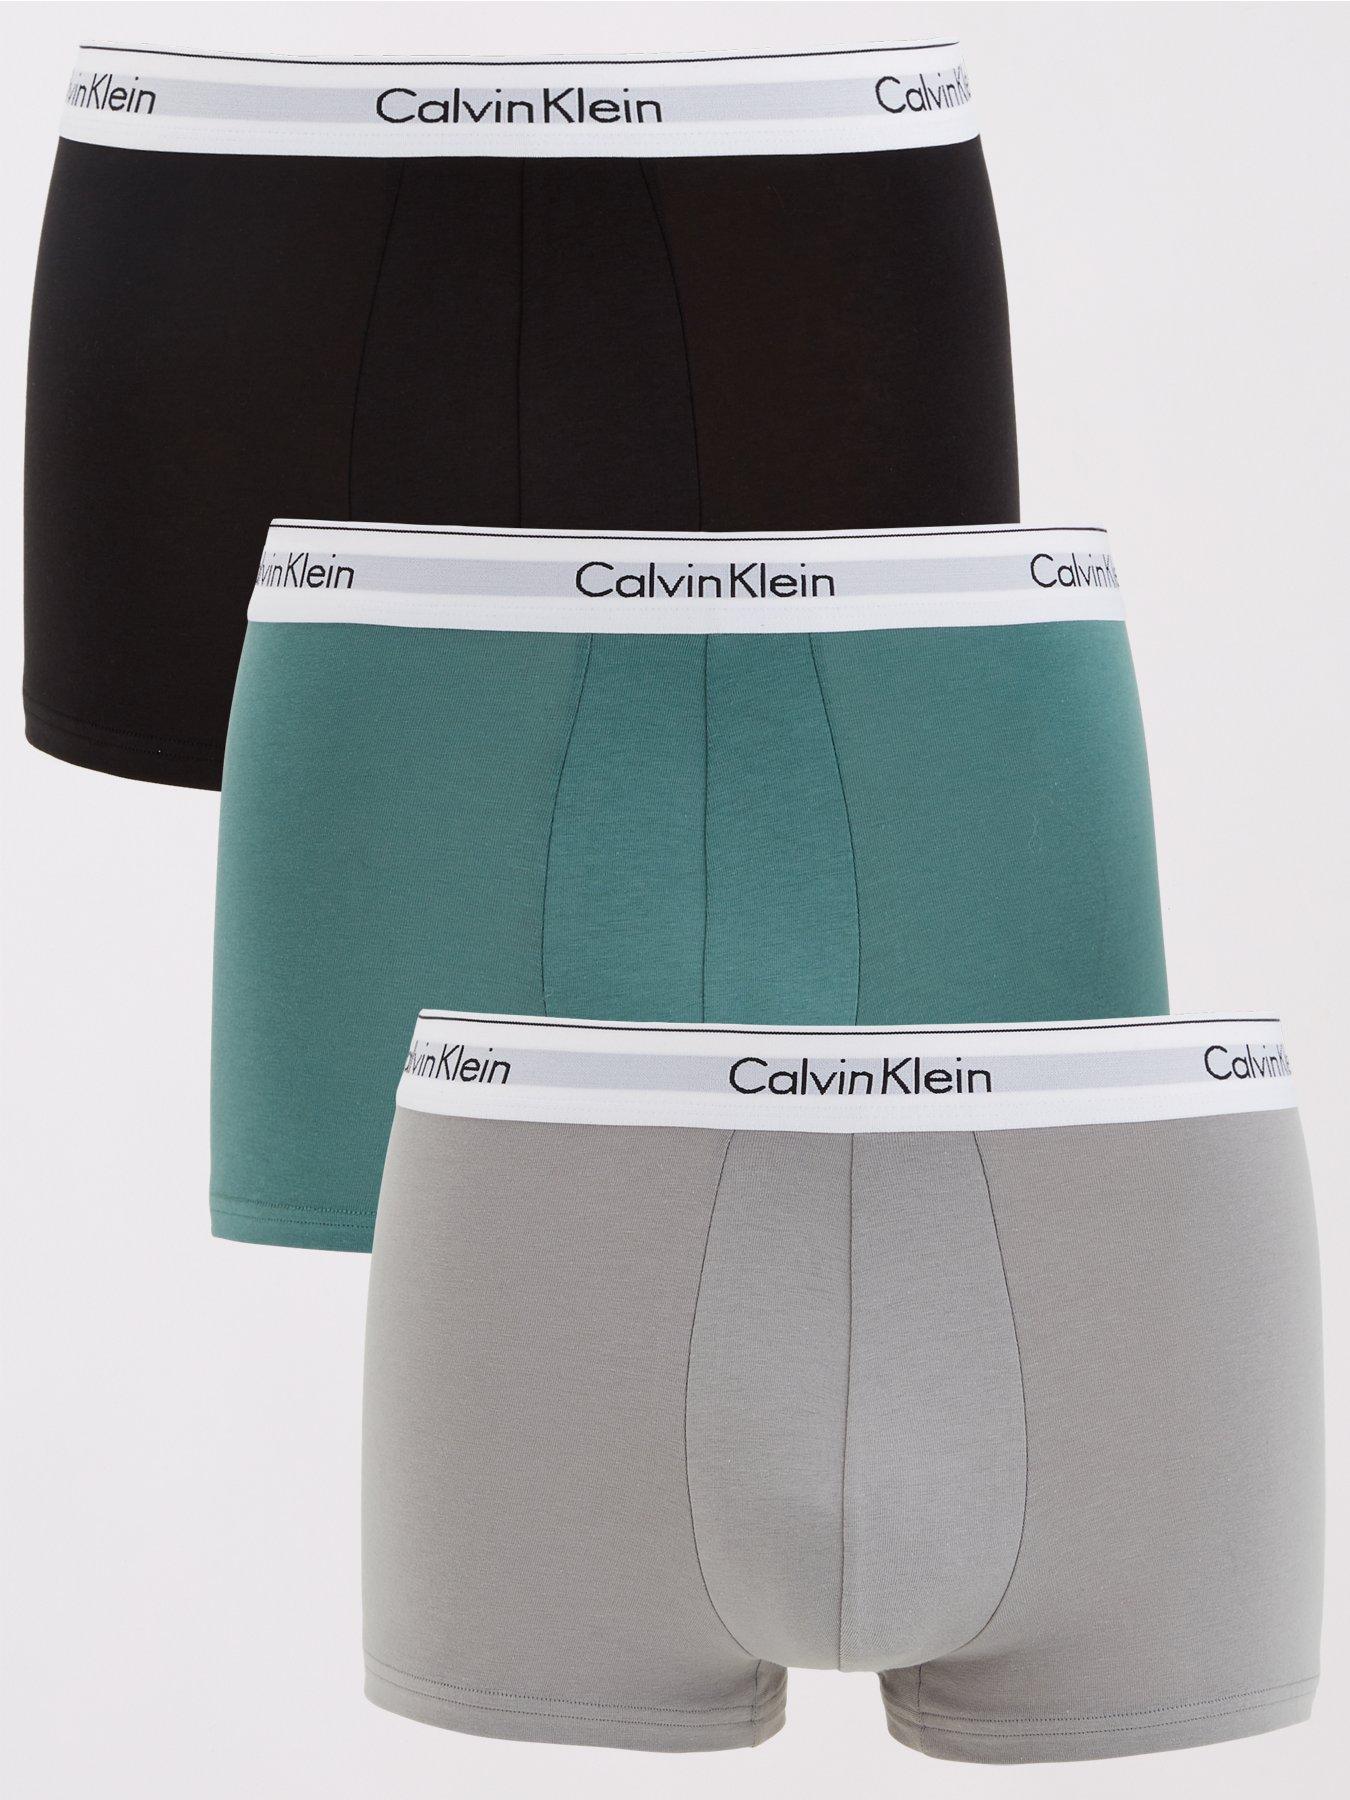 DKNY Mens Boxers 5 Pack Underwear Walpi Cotton Blend Desginer Logo Trunks